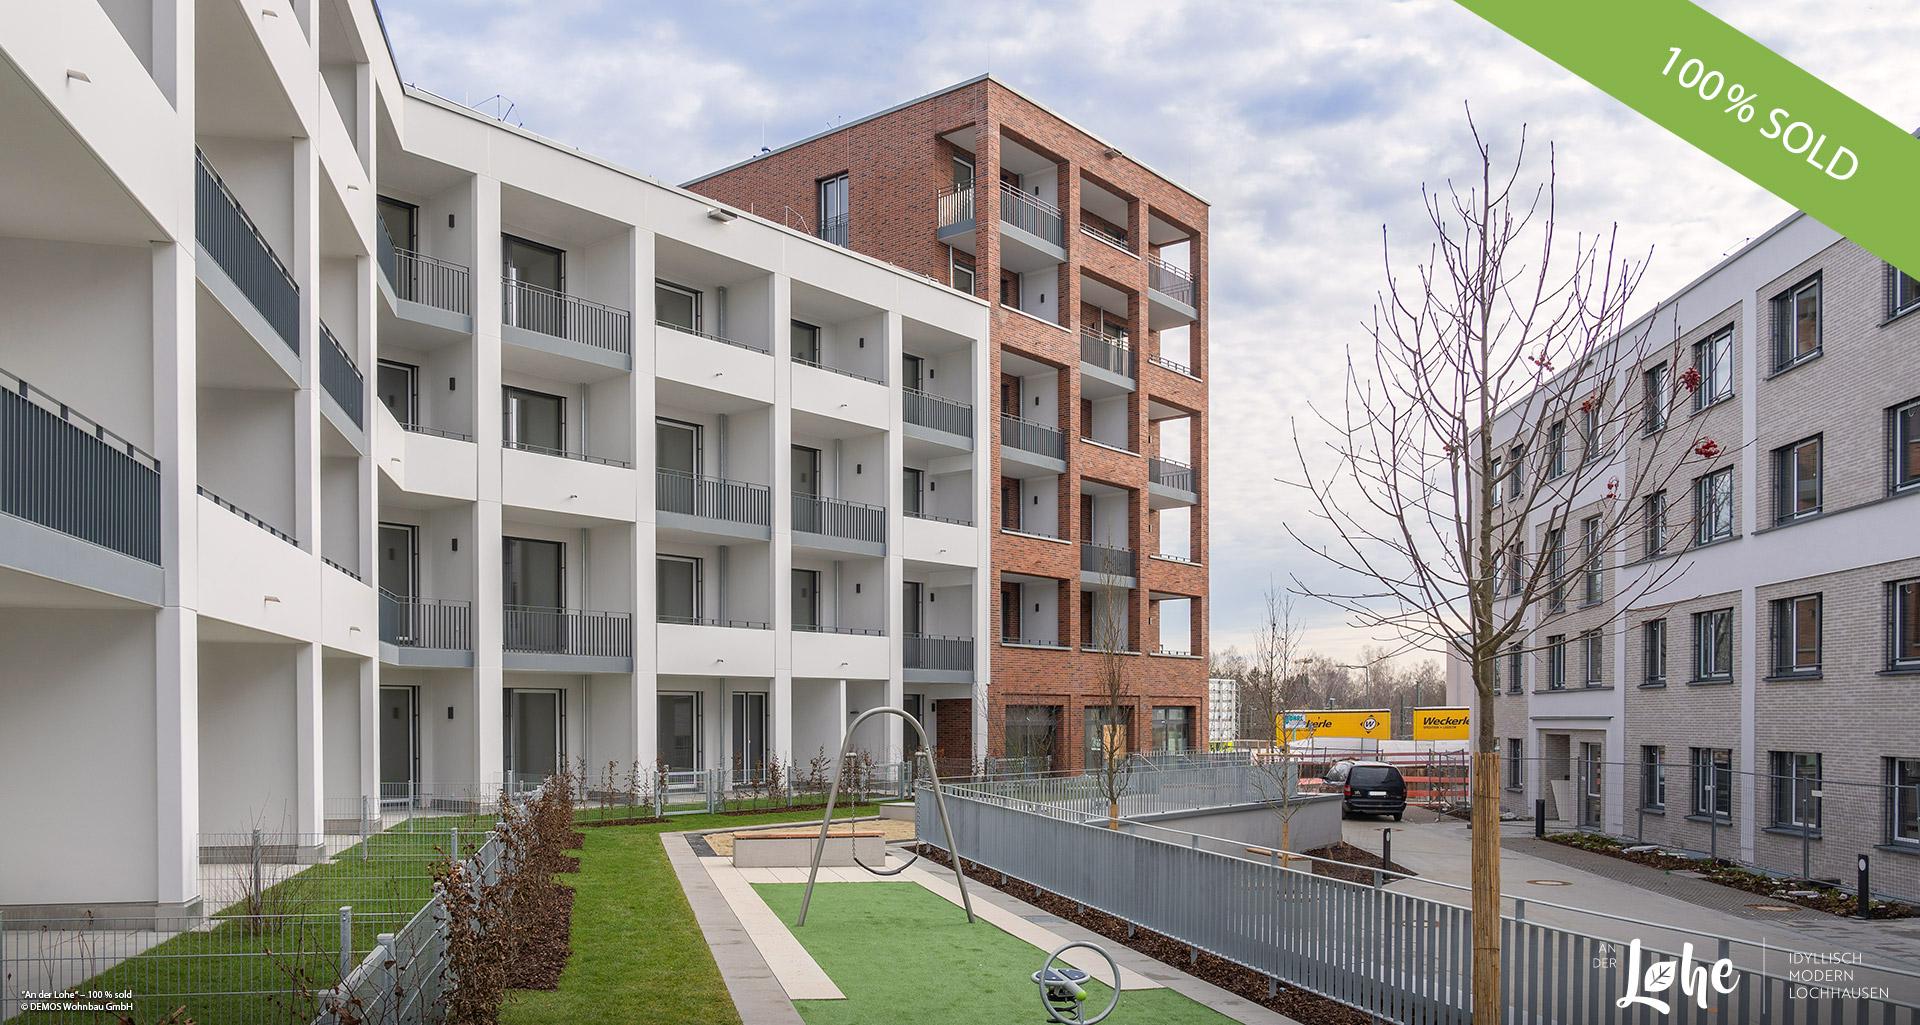 'An der Lohe' in Munich-Lochhausen: All condominiums are sold